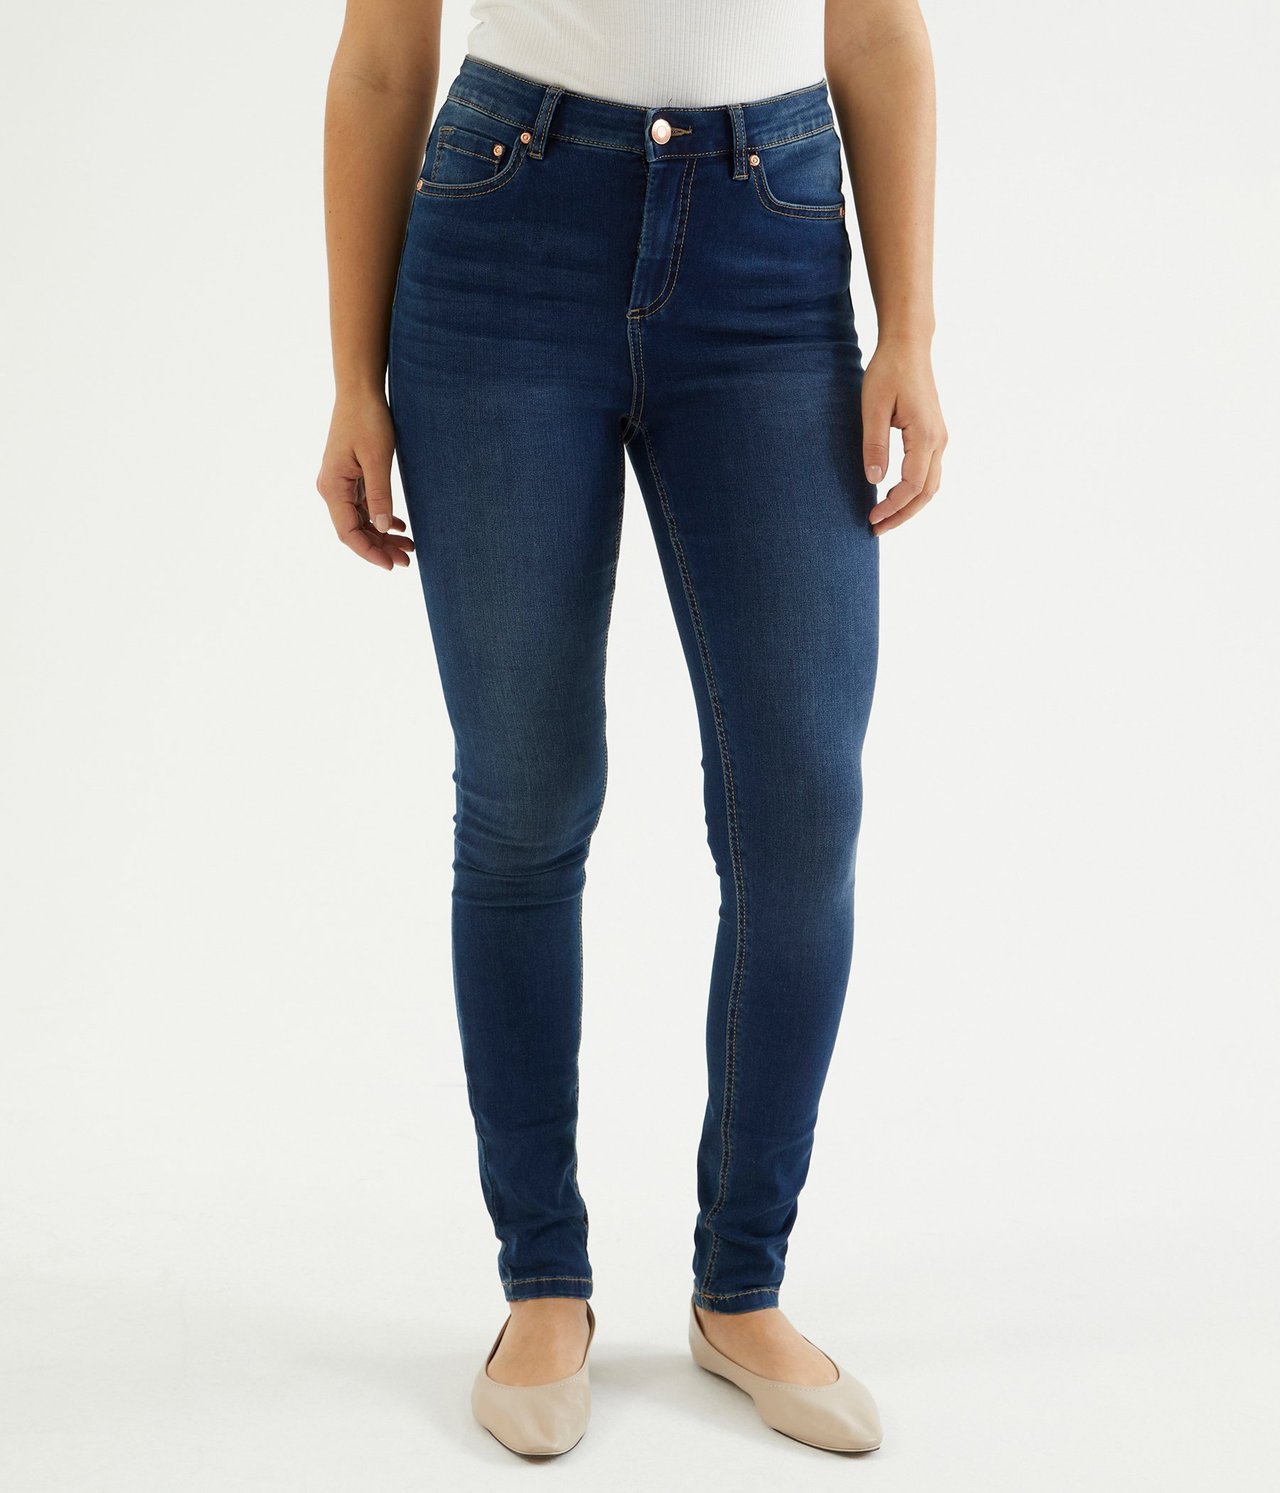 Super Slim Jeans High Waist - Mørk denim - 174cm / Storlek: 38 - 6